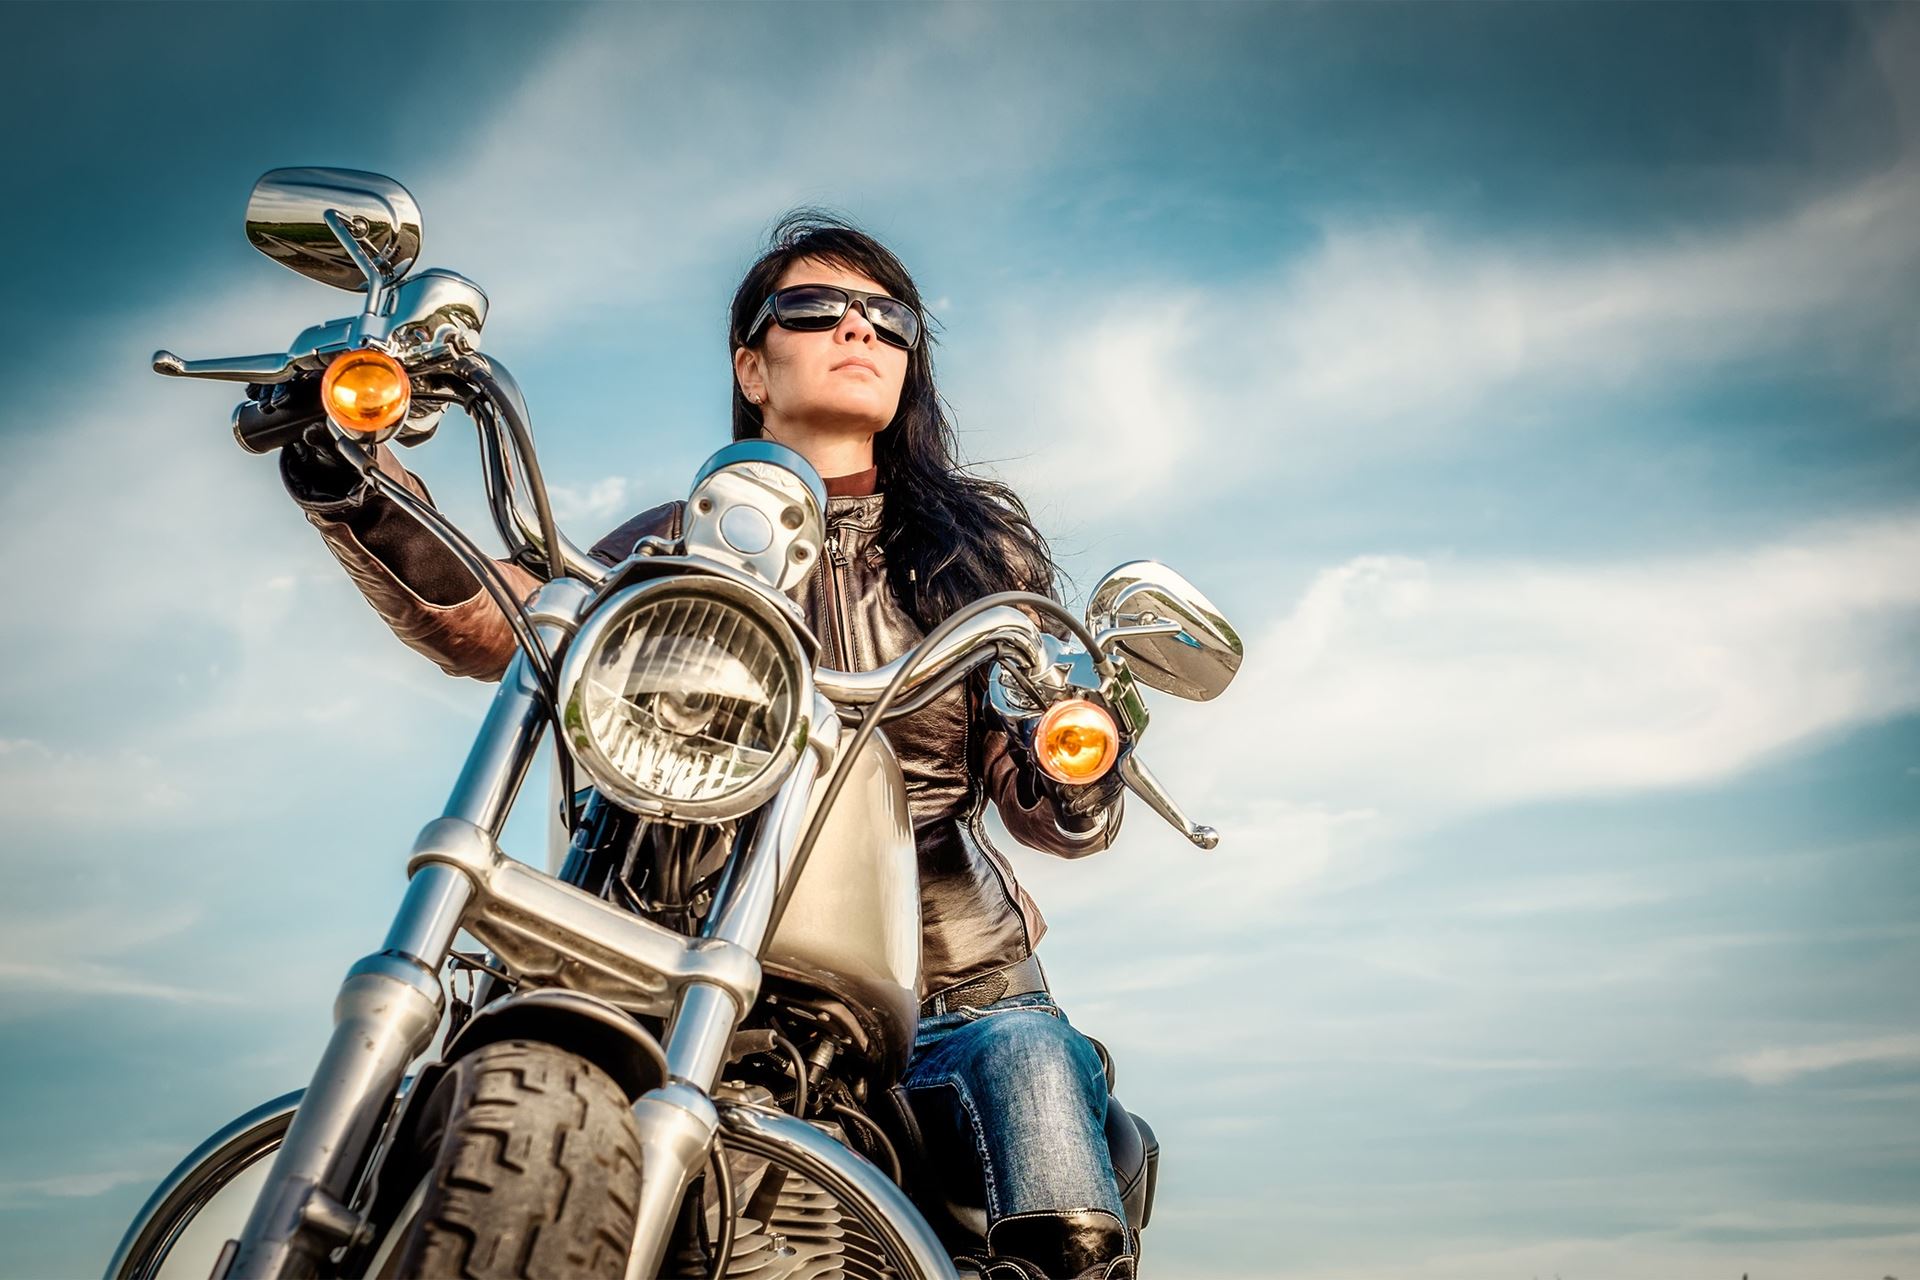 Sábado Celebra Se O International Female Ride Day Motonews Andar De Moto Brasil 1404